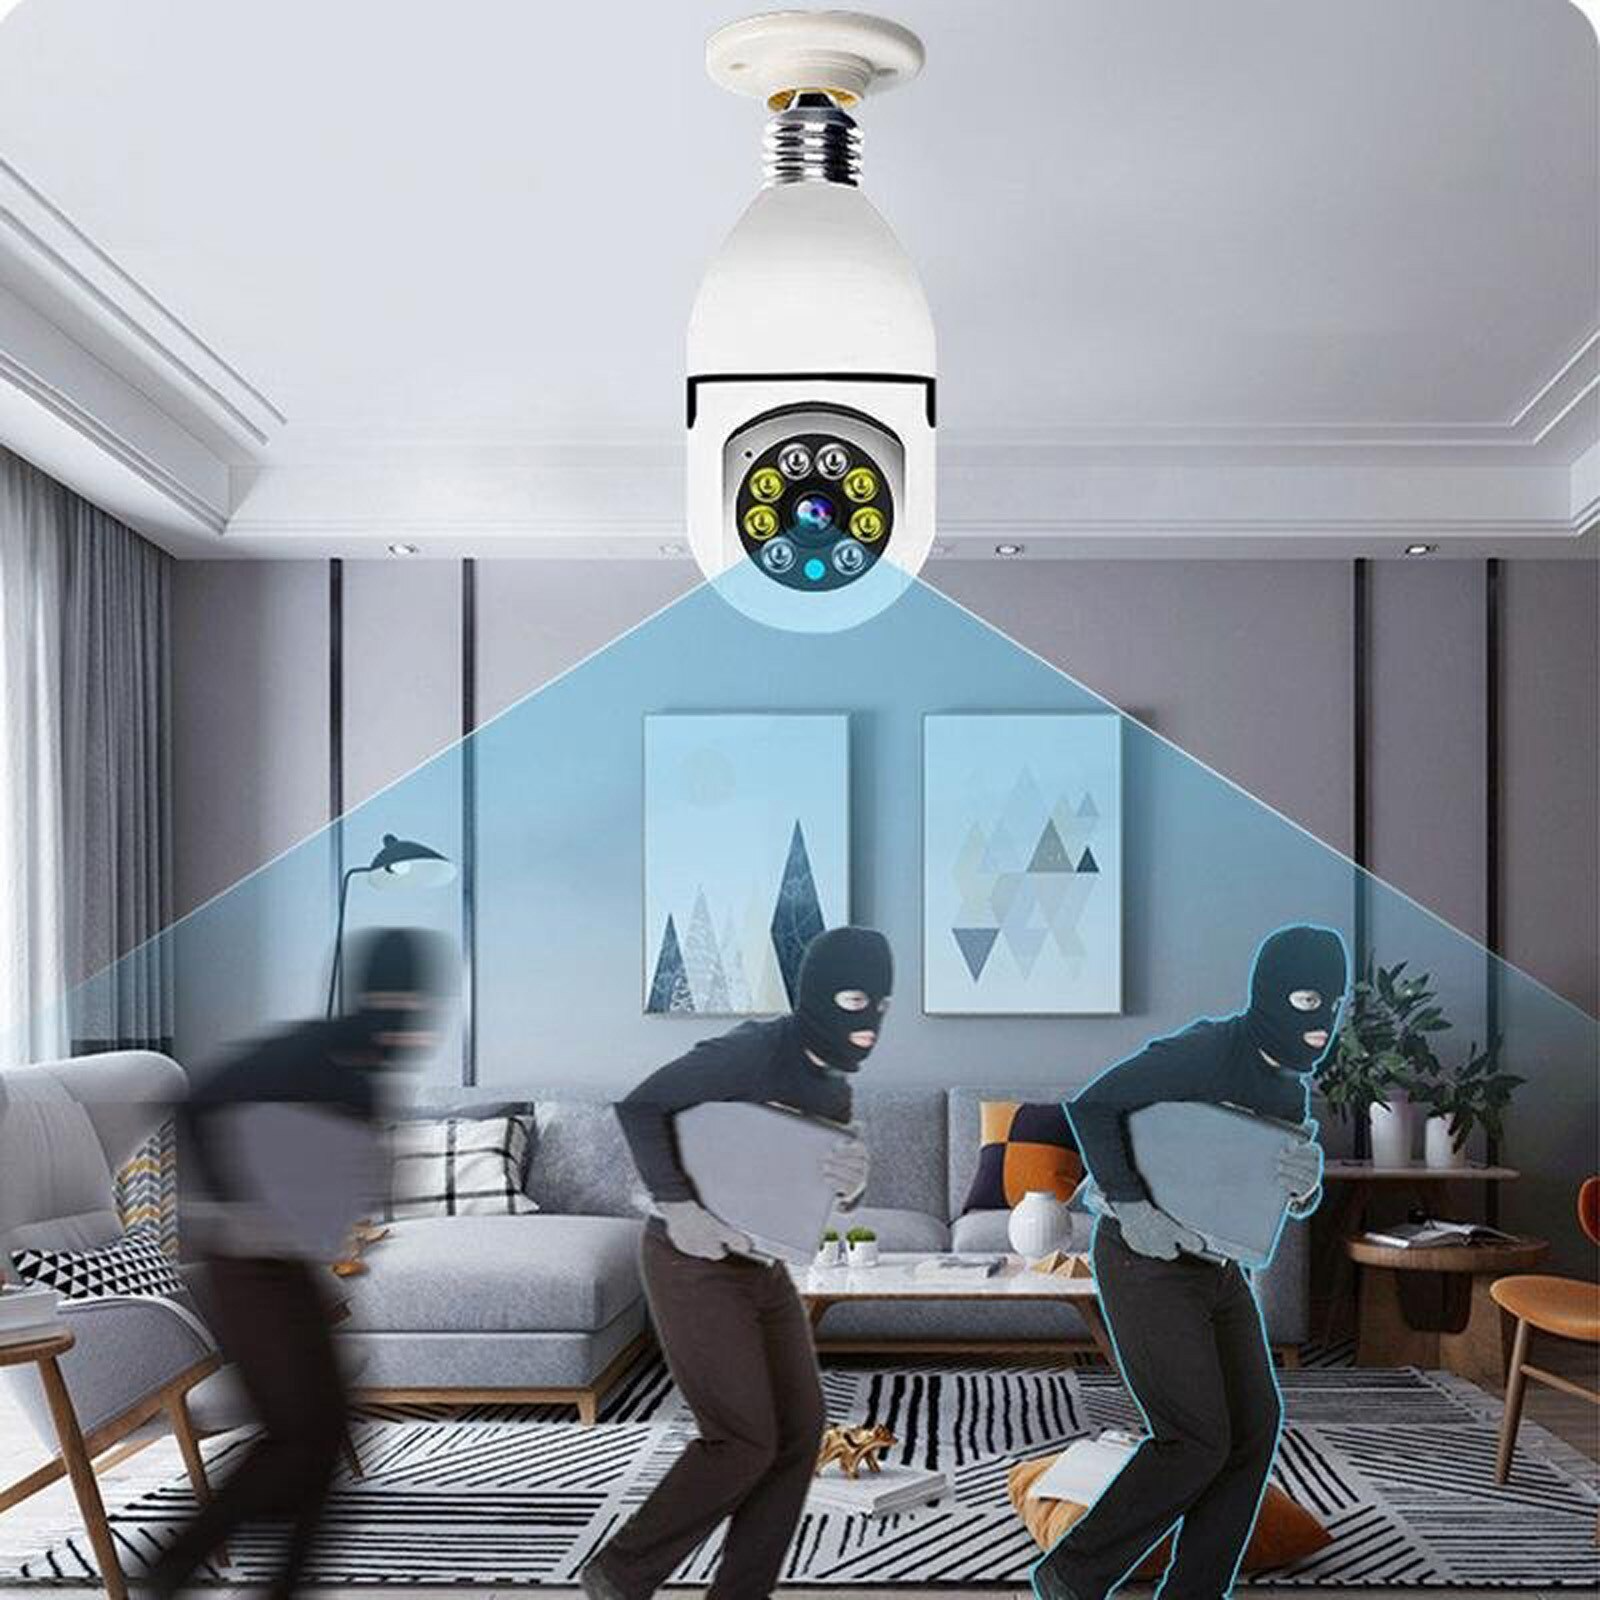 SecurityCamz™ Gloeilamp Beveiligingscamera